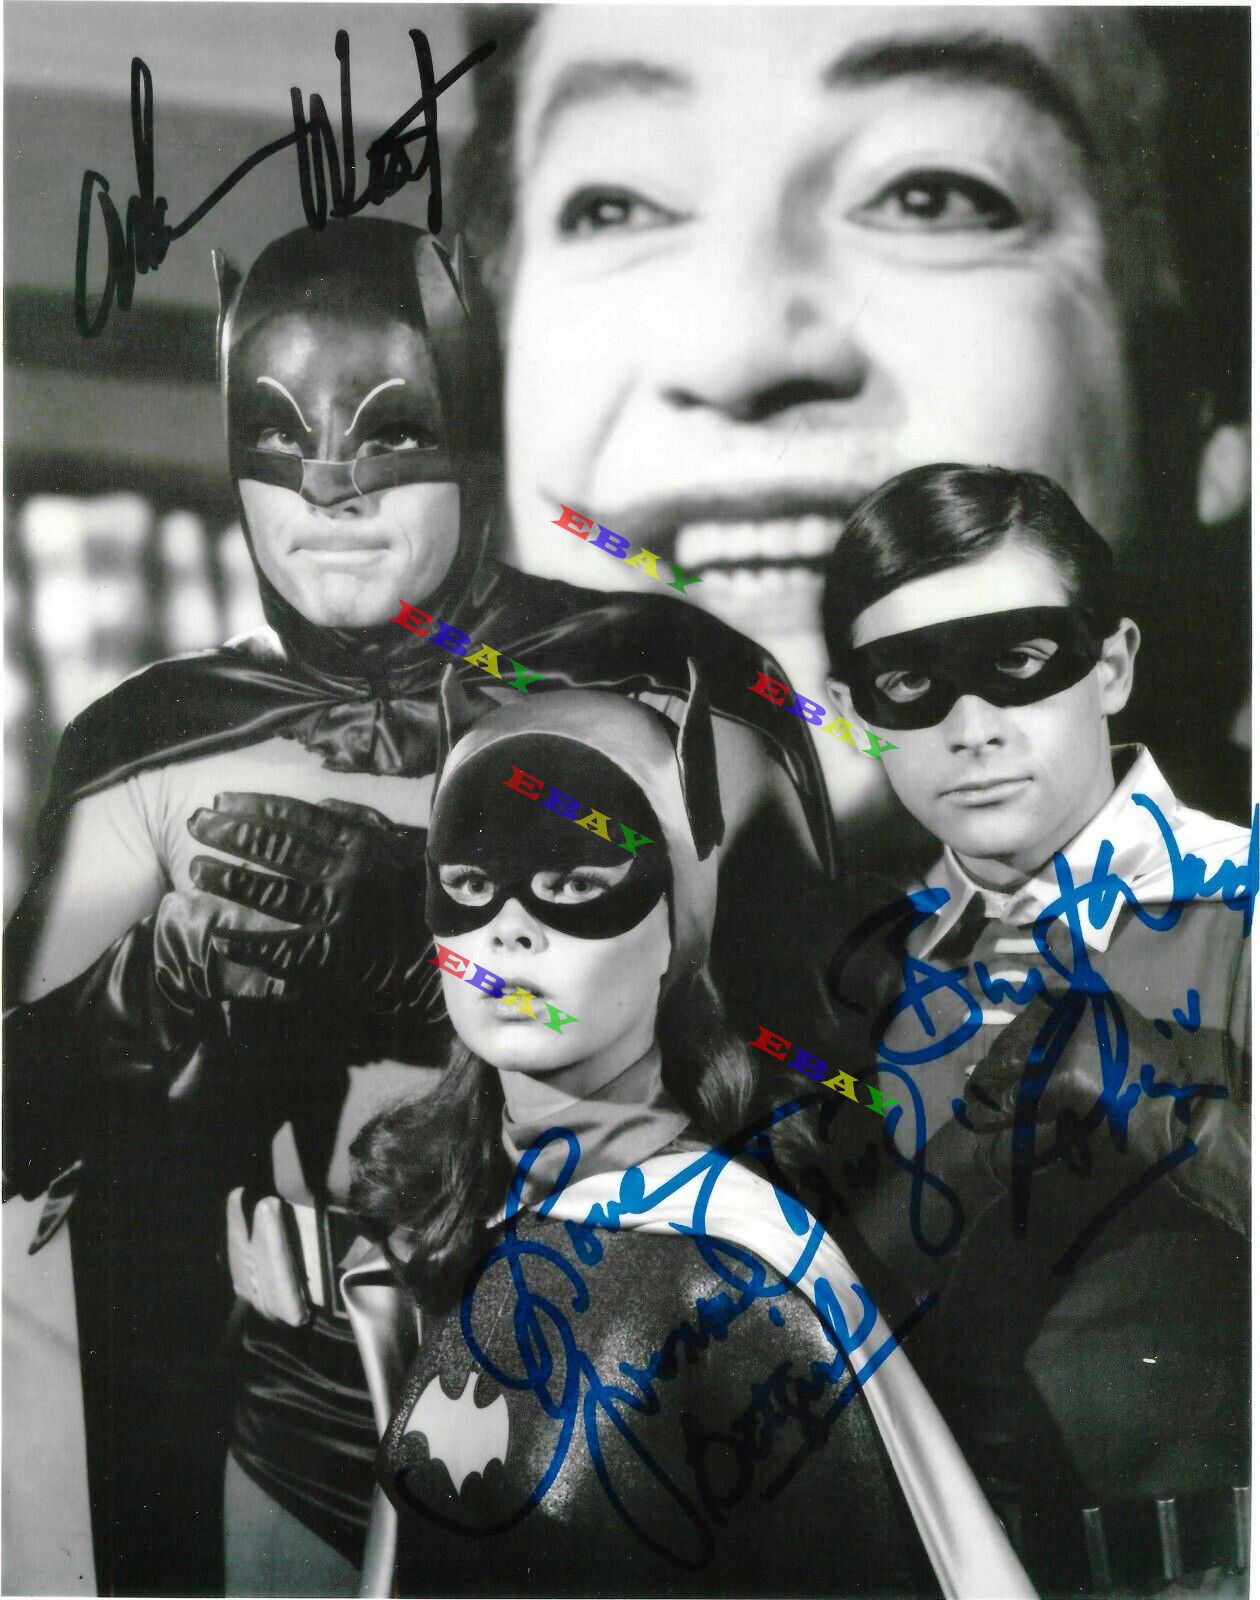 Batman West Craig Ward Cast Autographed Signed 8x10 Photo Poster painting Rep